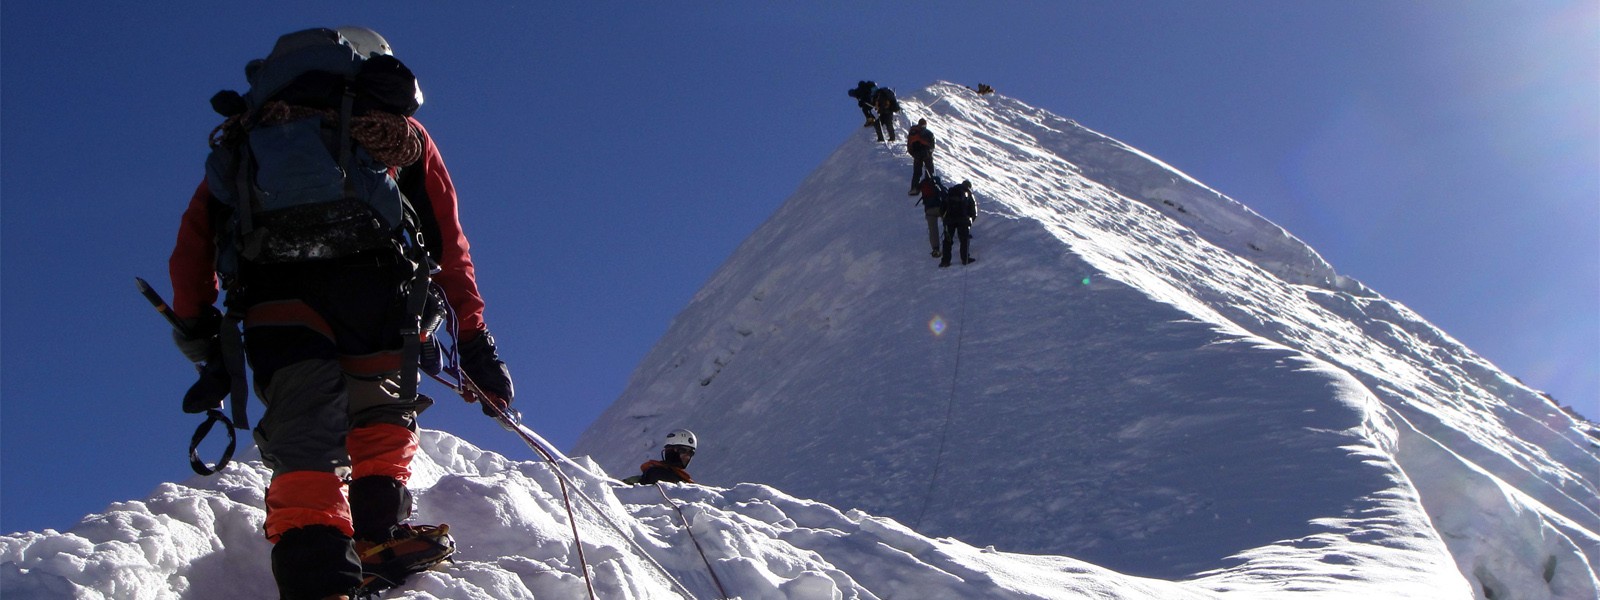 Everest Base Camp Trek with Island Peak Expedition